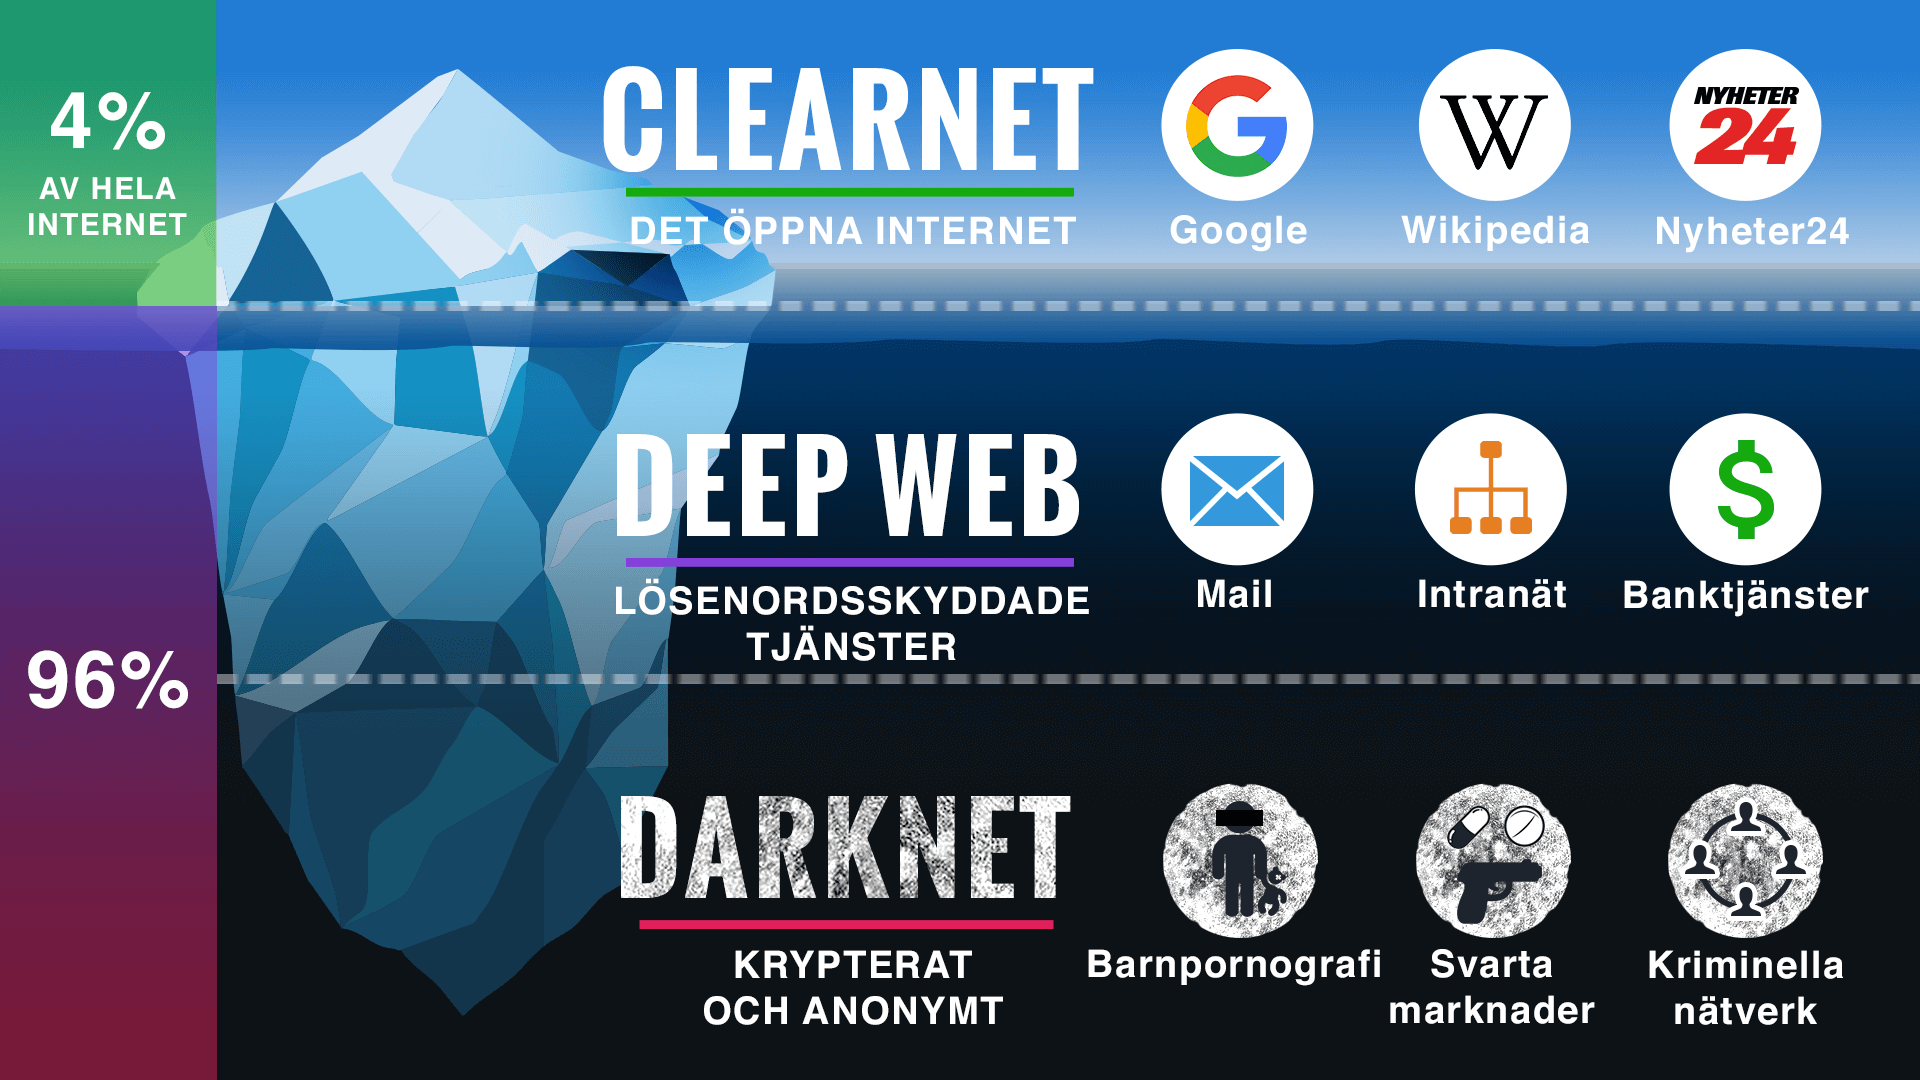 deep net or darknet hudra